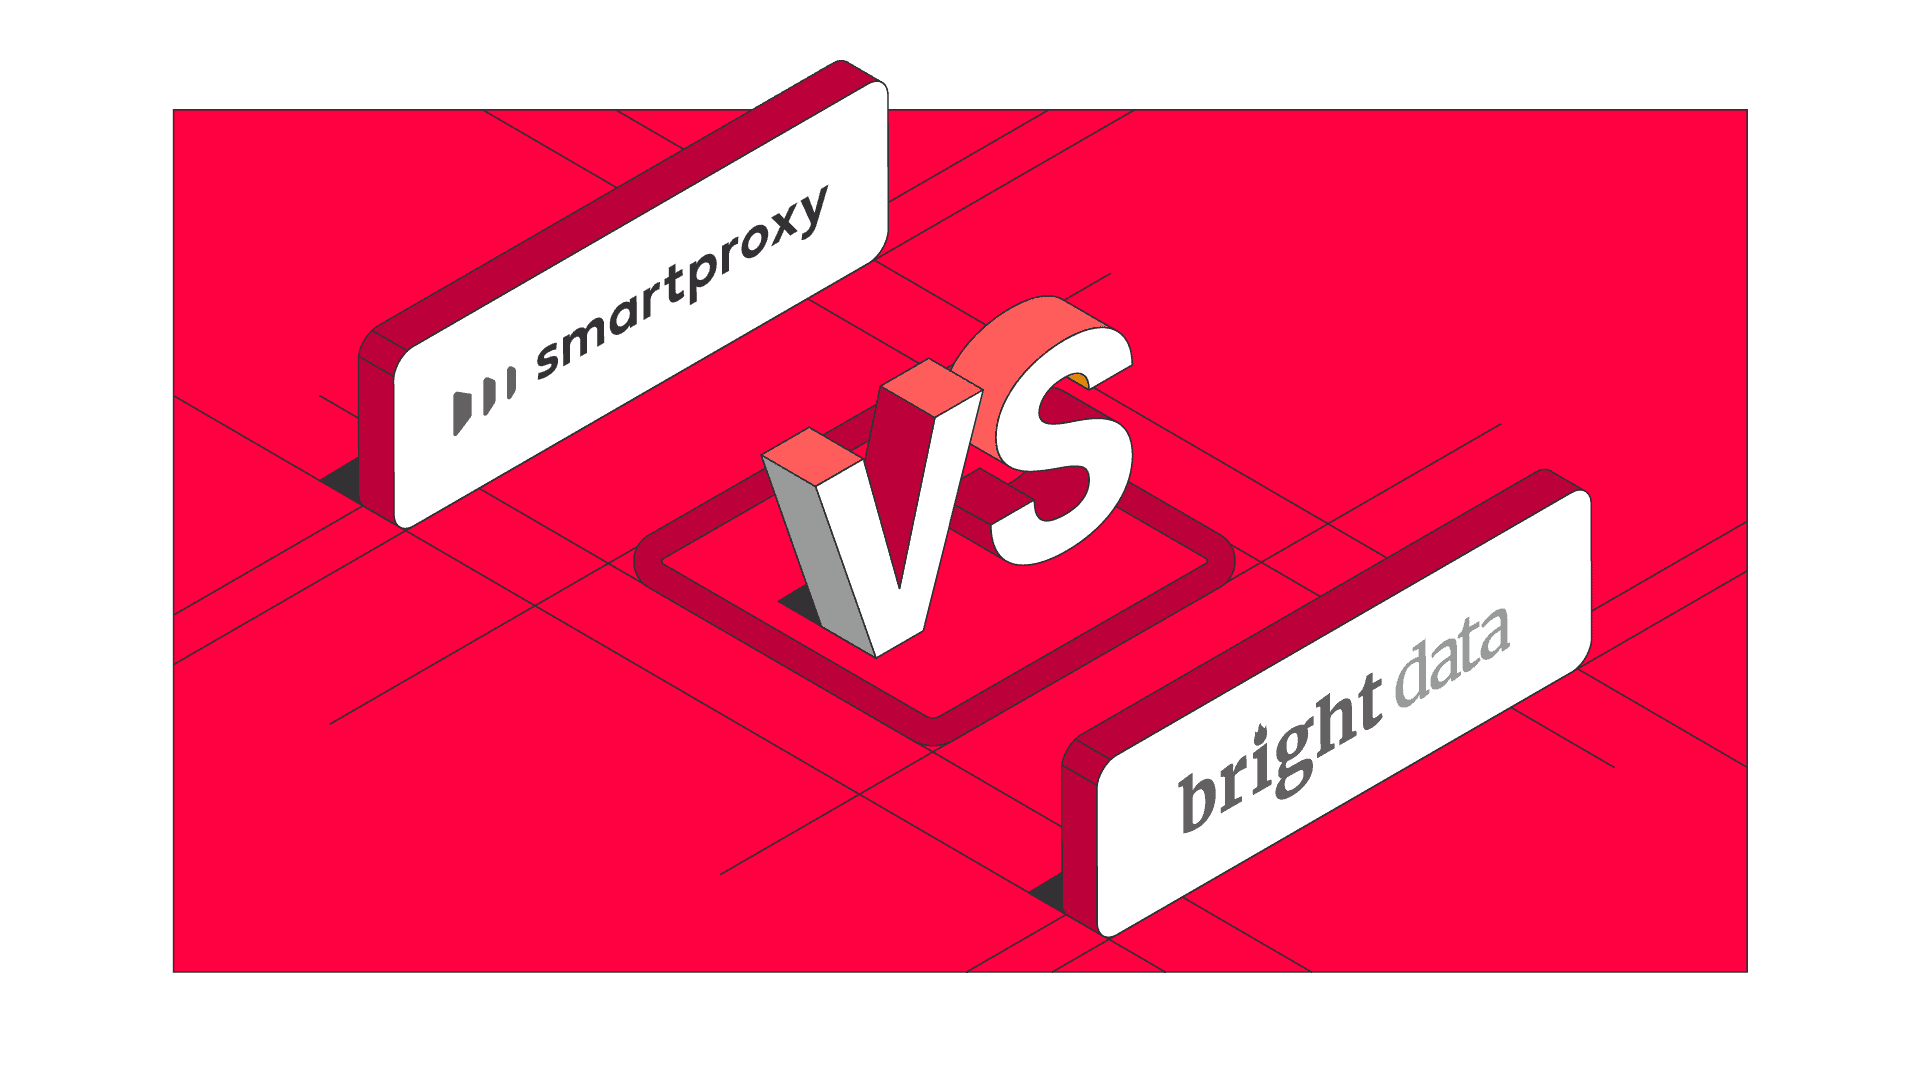 smartproxy vs bright data thumbnail